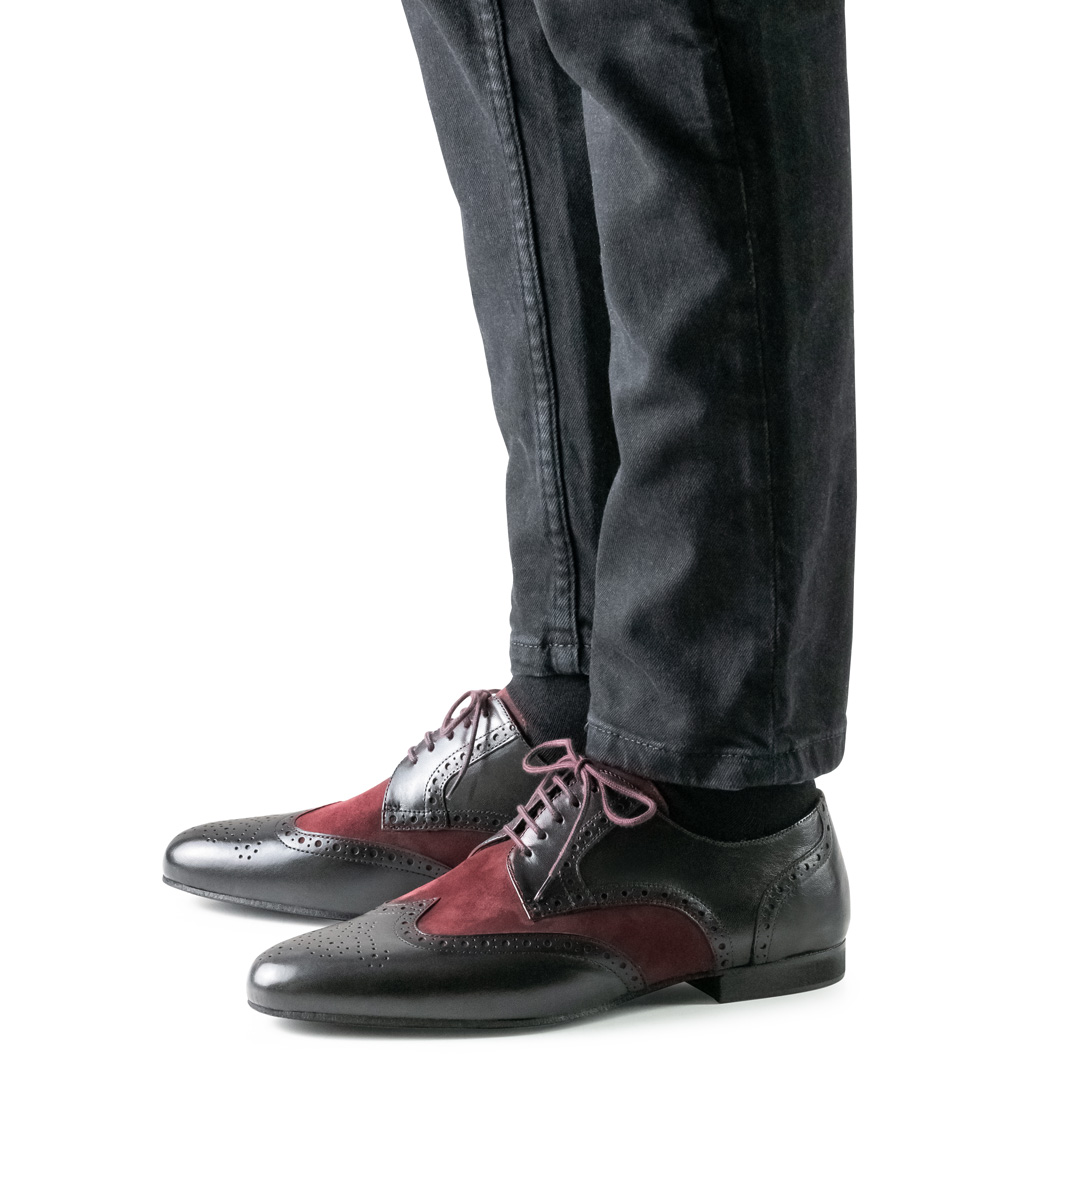 Werner Kern men's dance shoe with micro heel in combination with black jeans